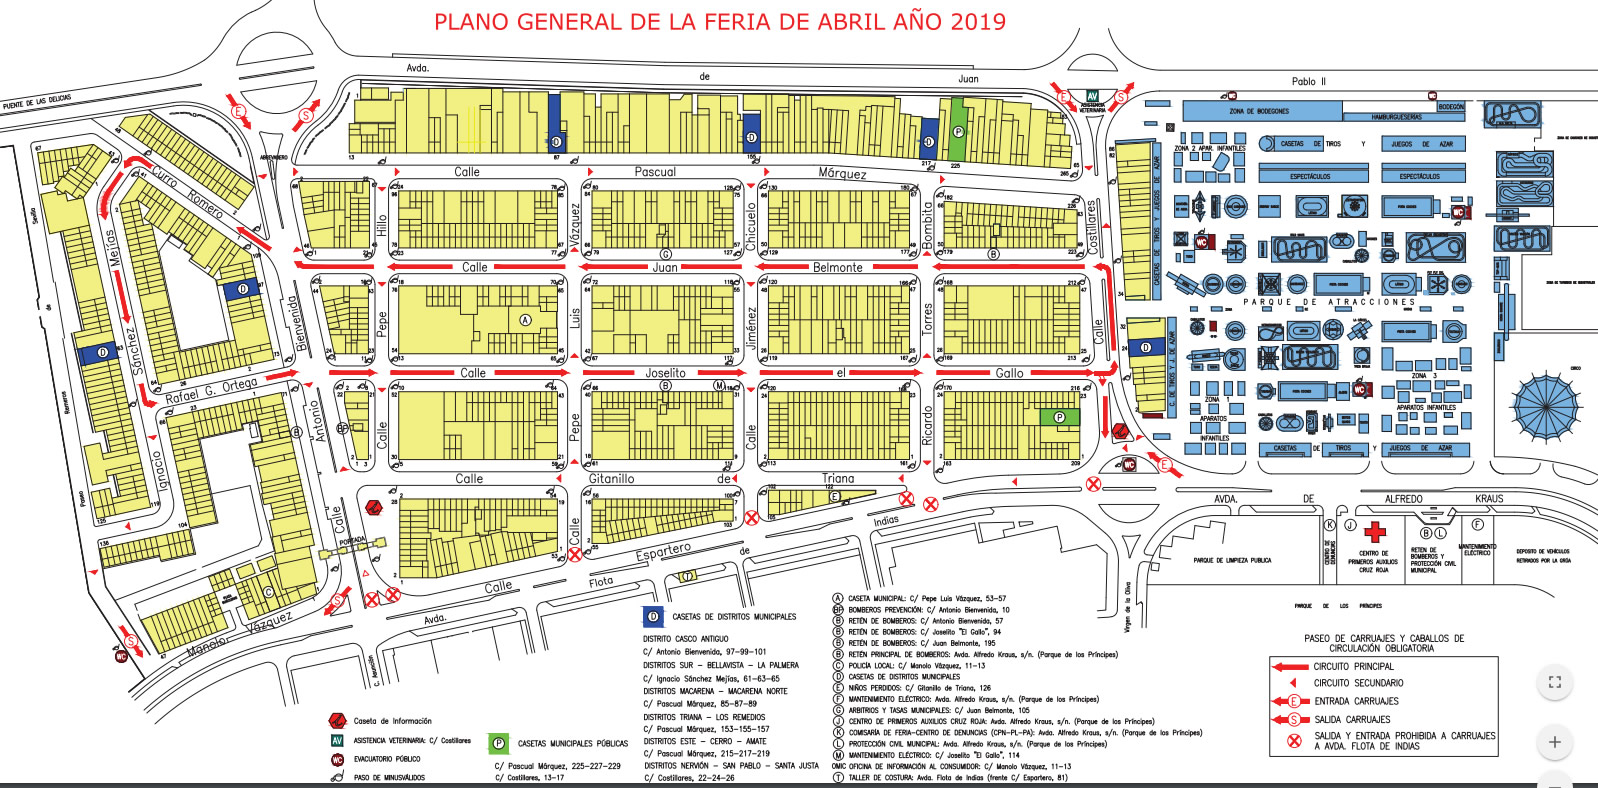 Plano de la Feria de Abril de Sevilla 2019